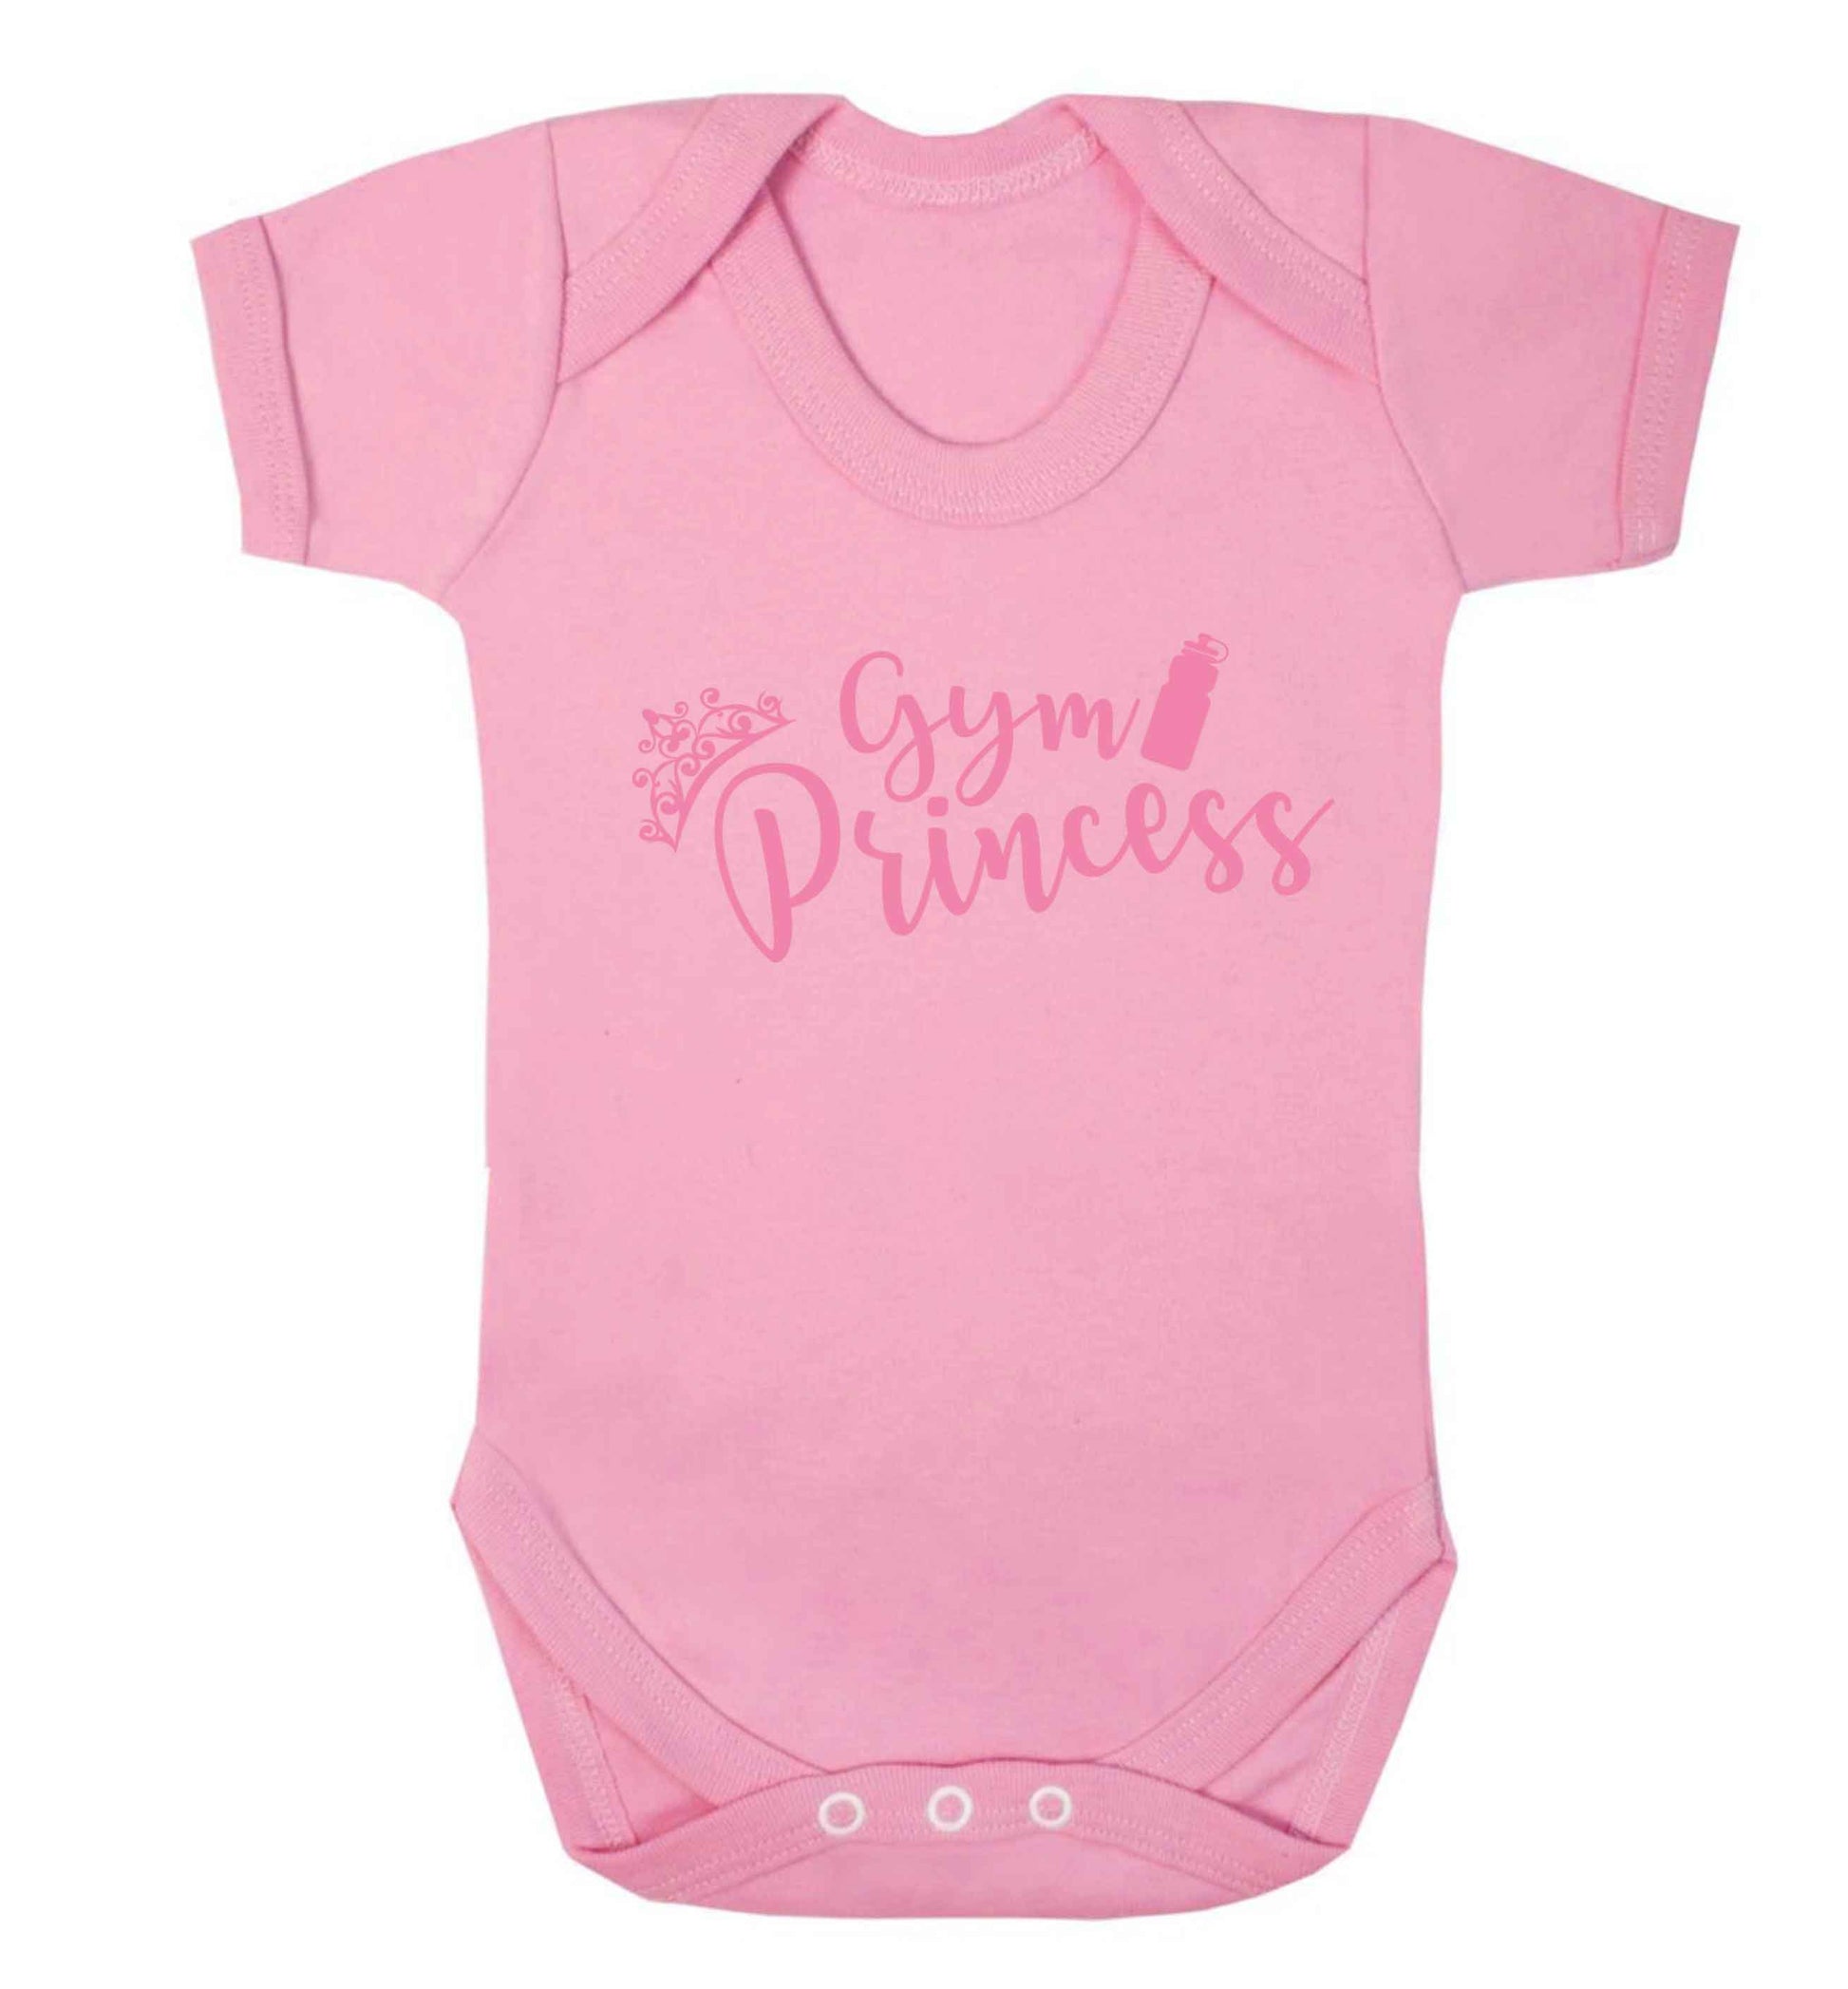 Gym princess Baby Vest pale pink 18-24 months